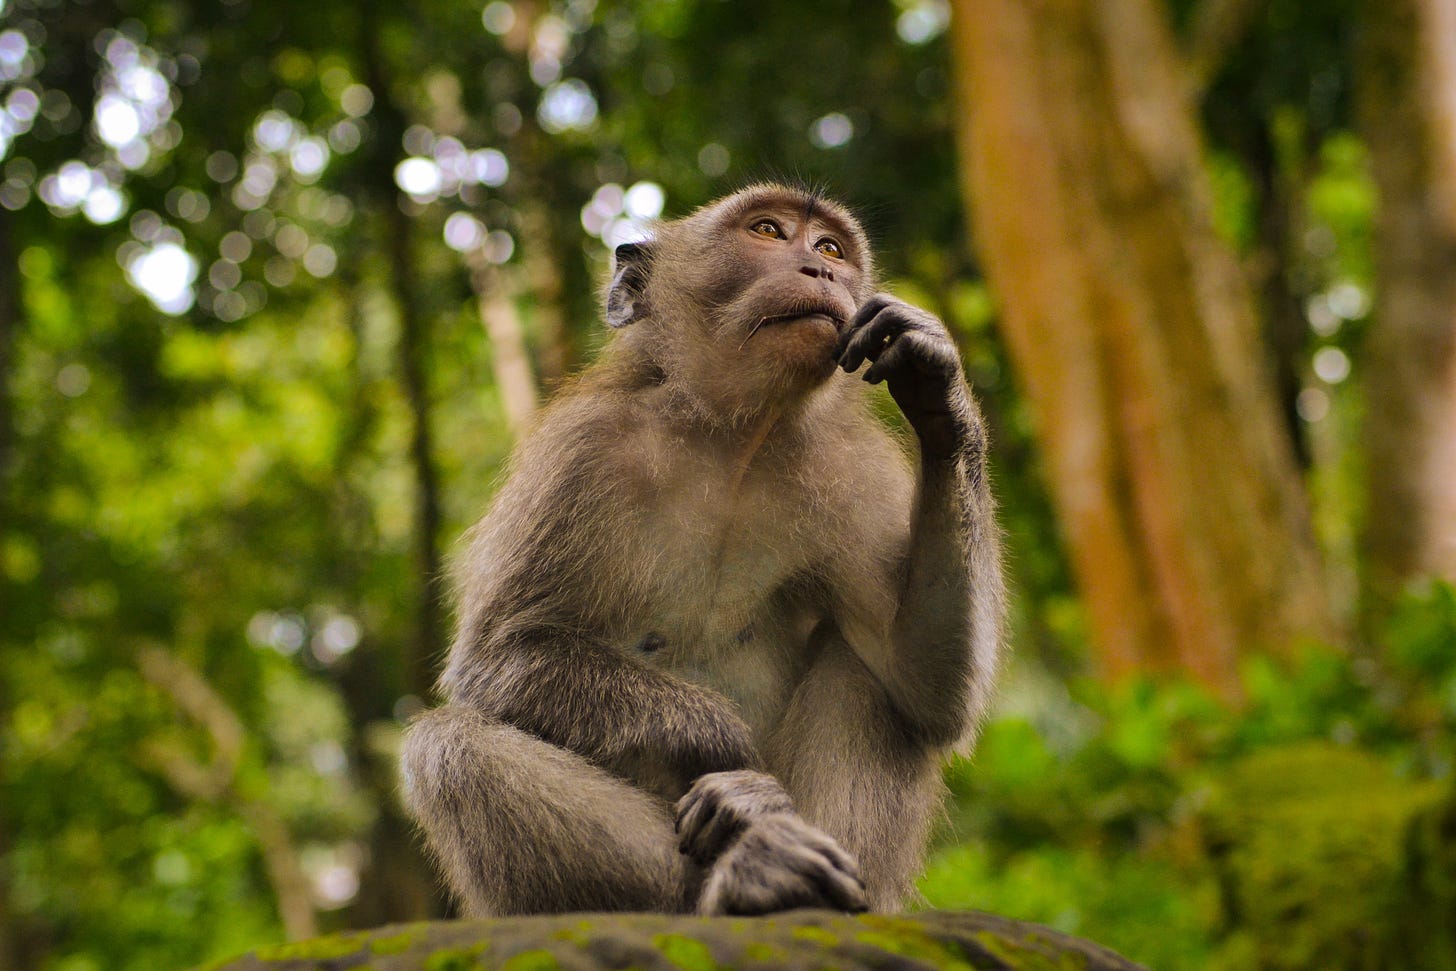 Photo of a monkey in a thoughtful pose. Photo by Juan Rumimpunu via unsplash.com